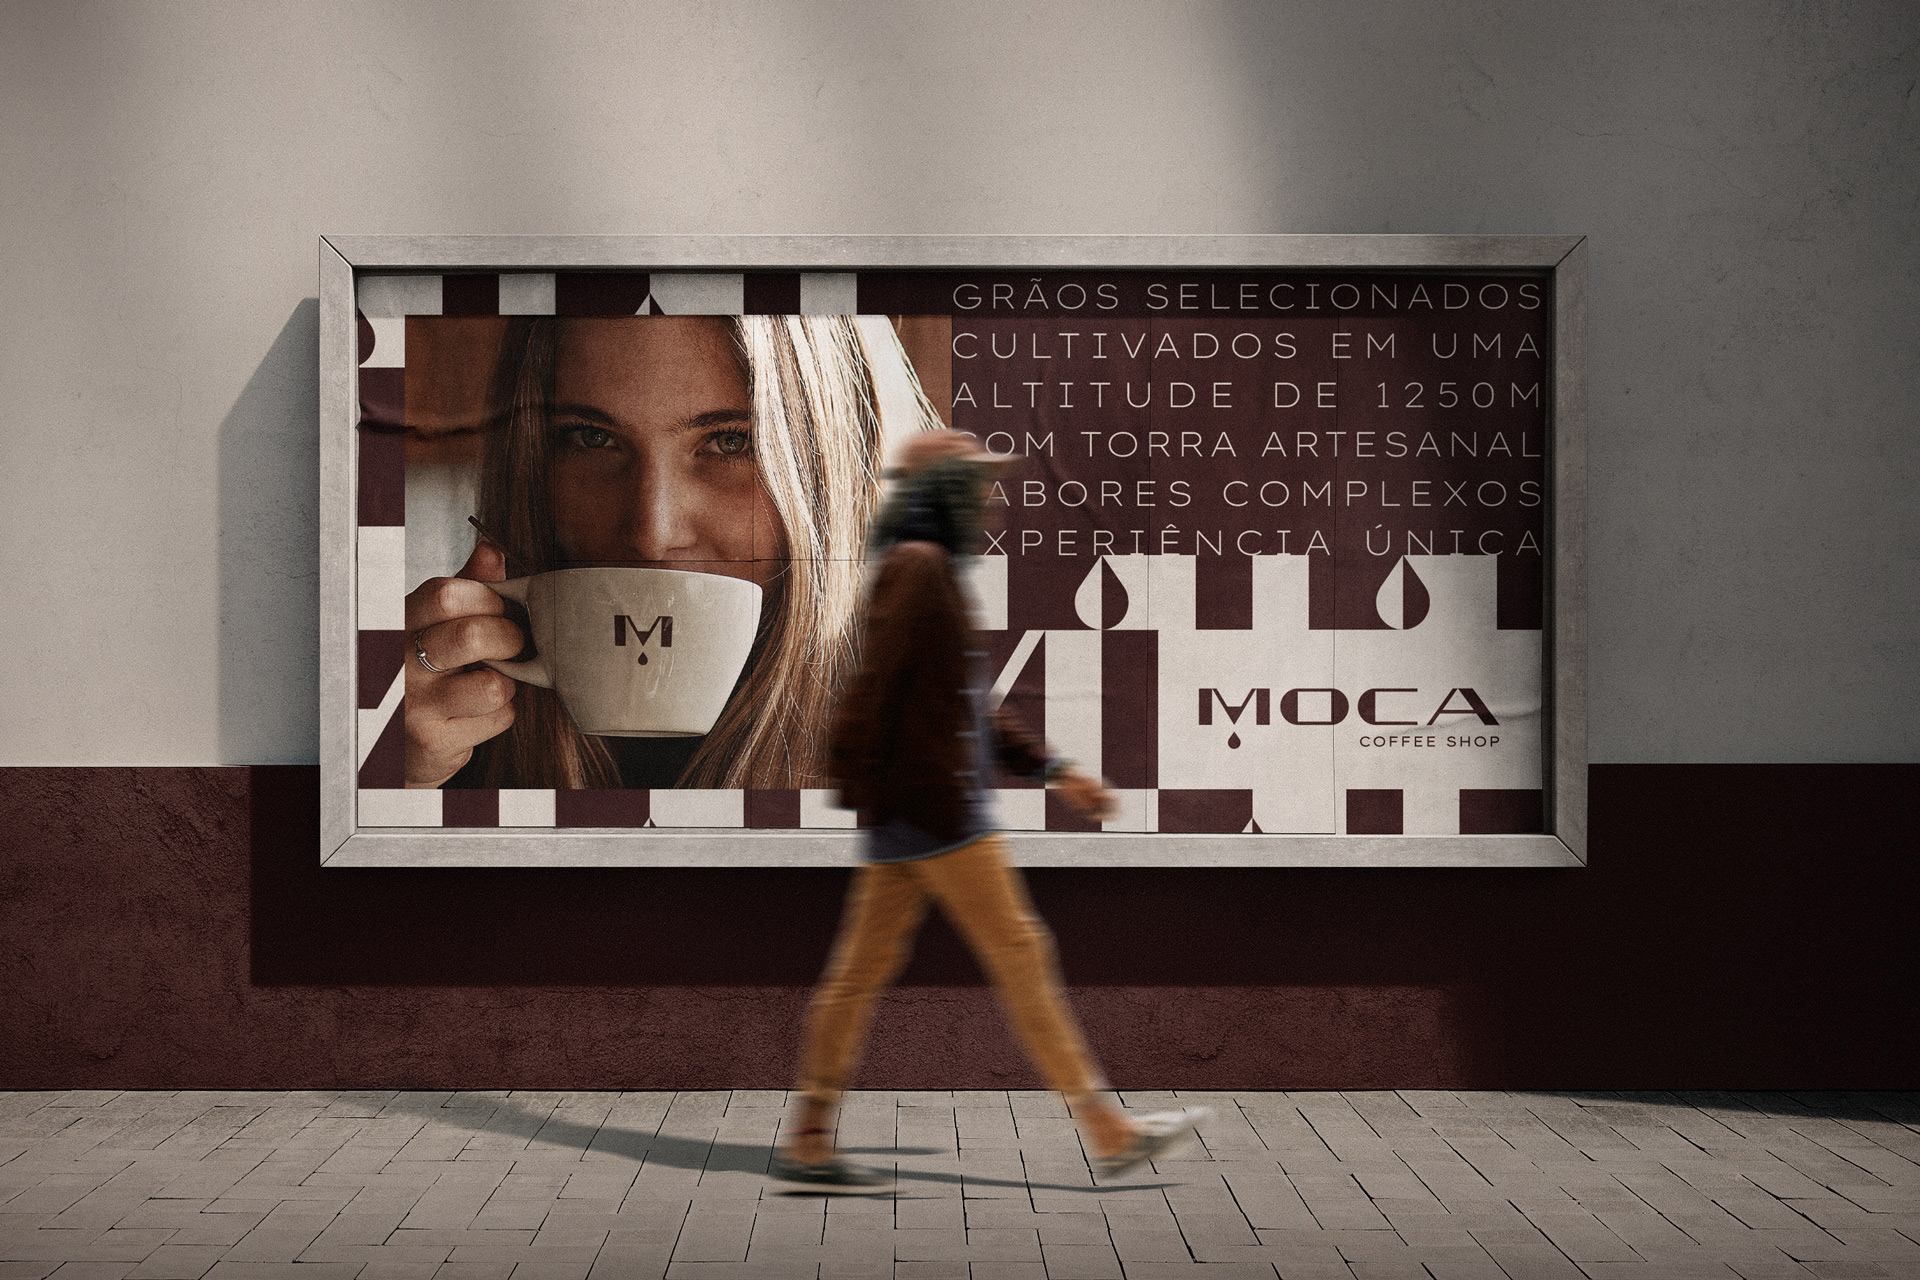 Moca Coffee Shop by Lucas Coradi